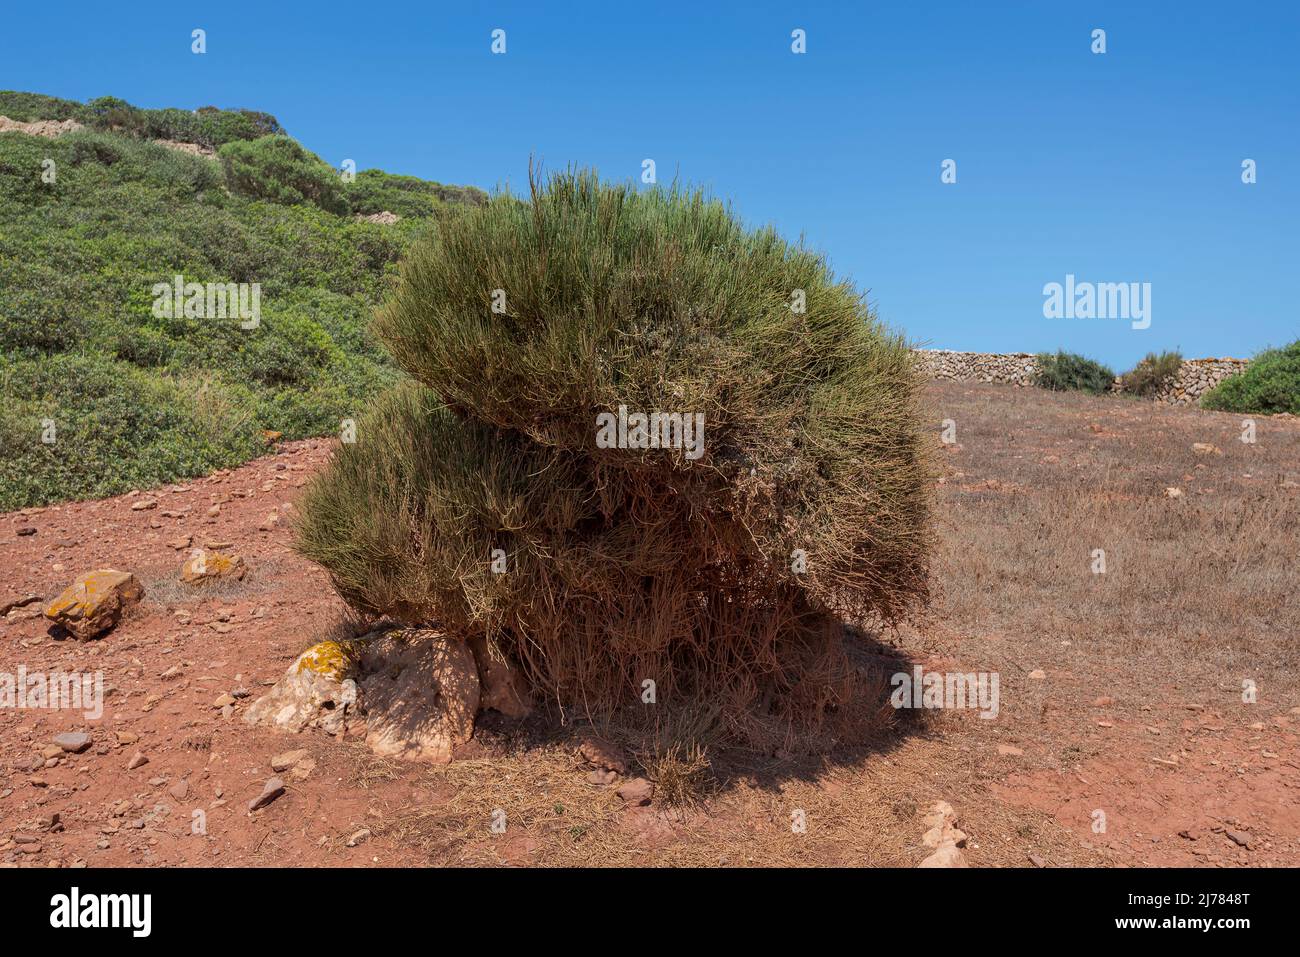 Joint Pine, Ephedra fragilis. Photo taken in the municipality of Es Mercadal, Menorca, Spain Stock Photo